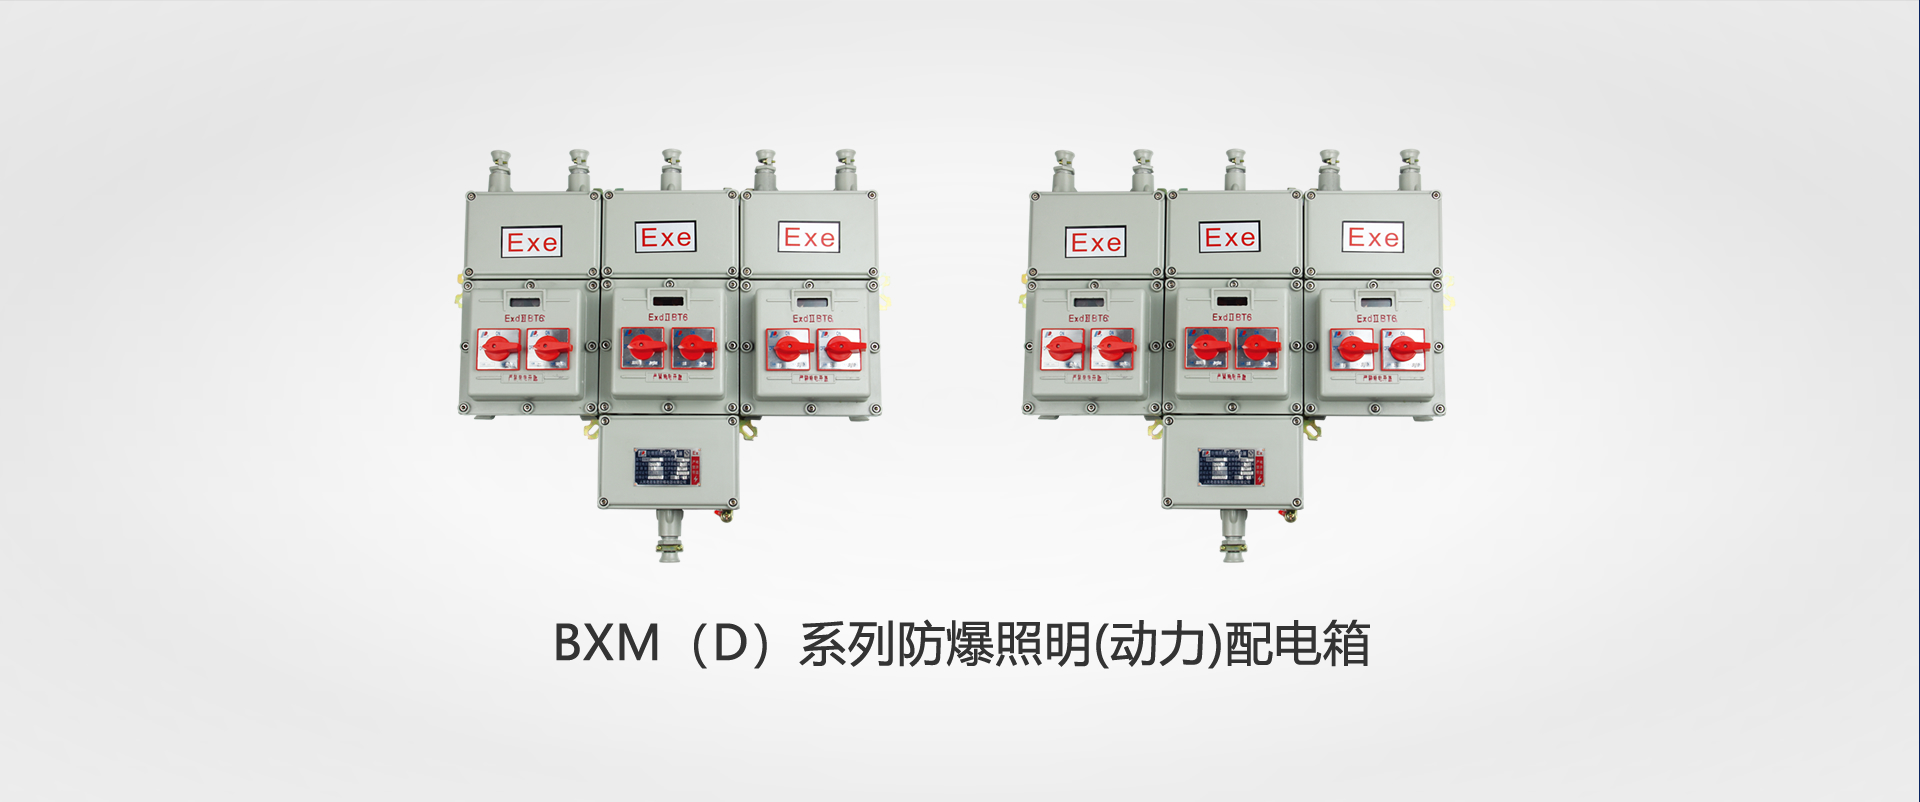 BXM（D）系(xi)列防爆照明(動力(li))配(pei)電箱